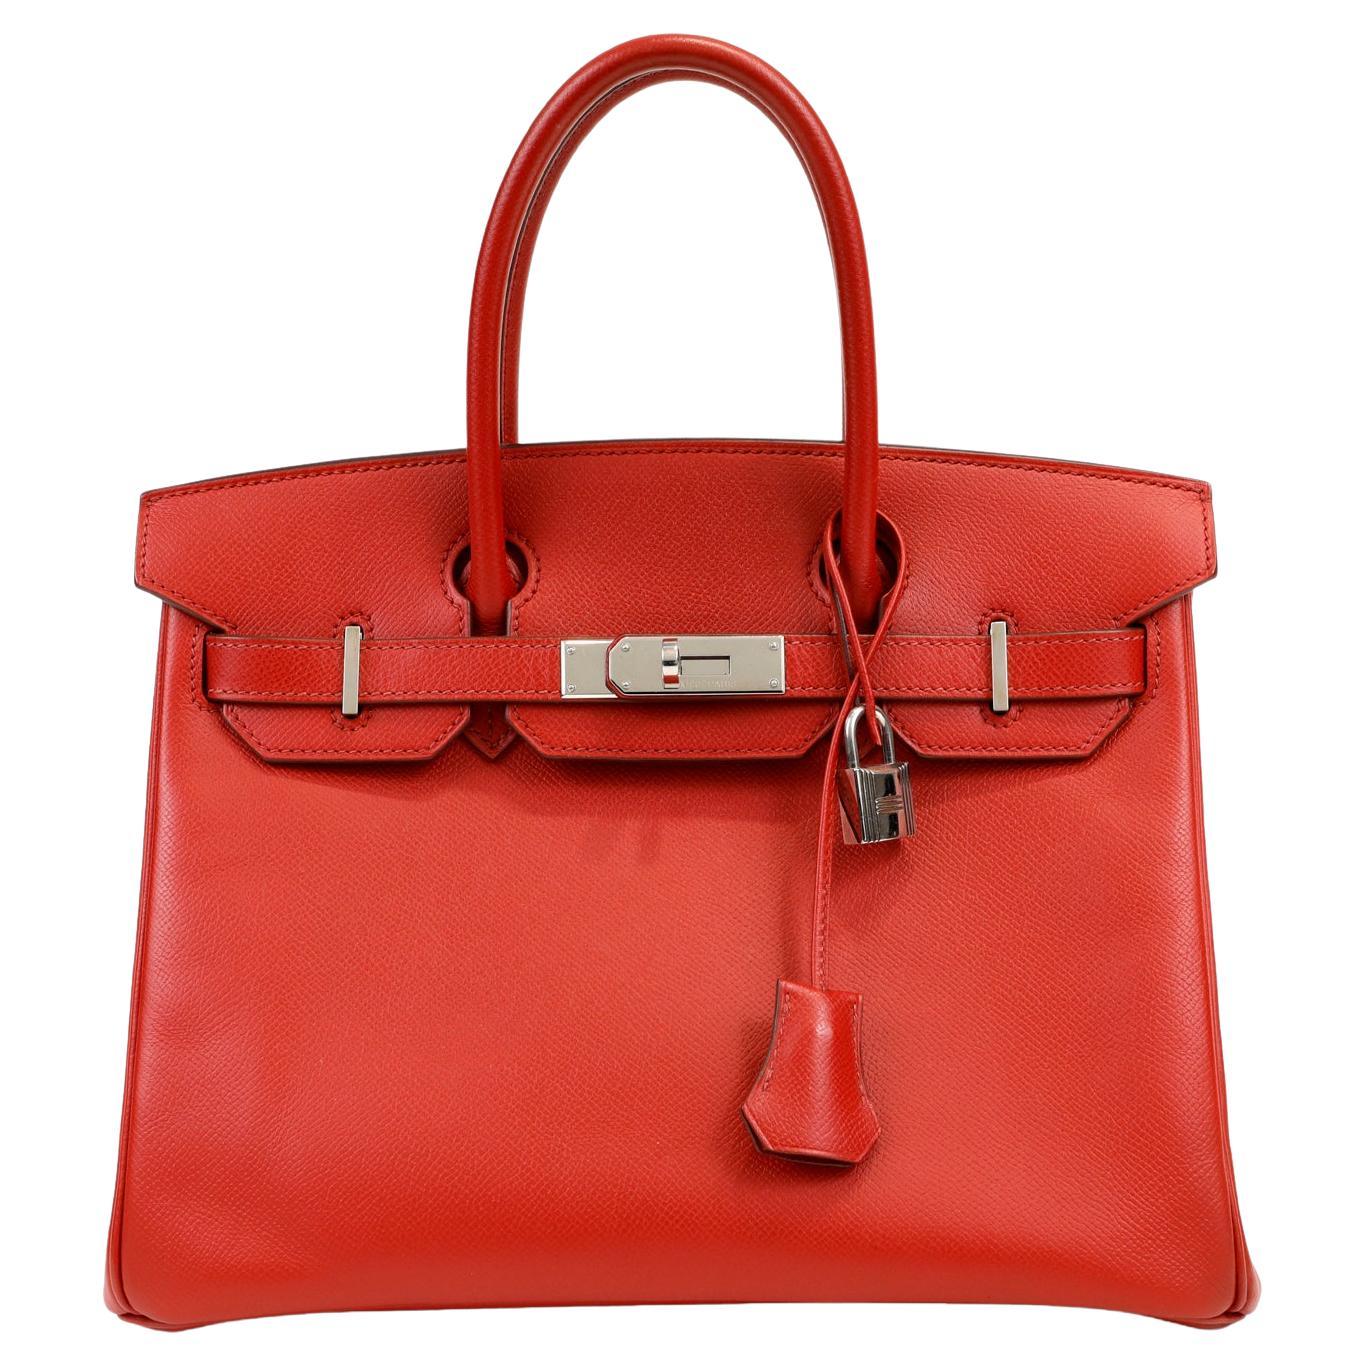 Hermès Vivid Red Epsom 30 cm Birkin Bag